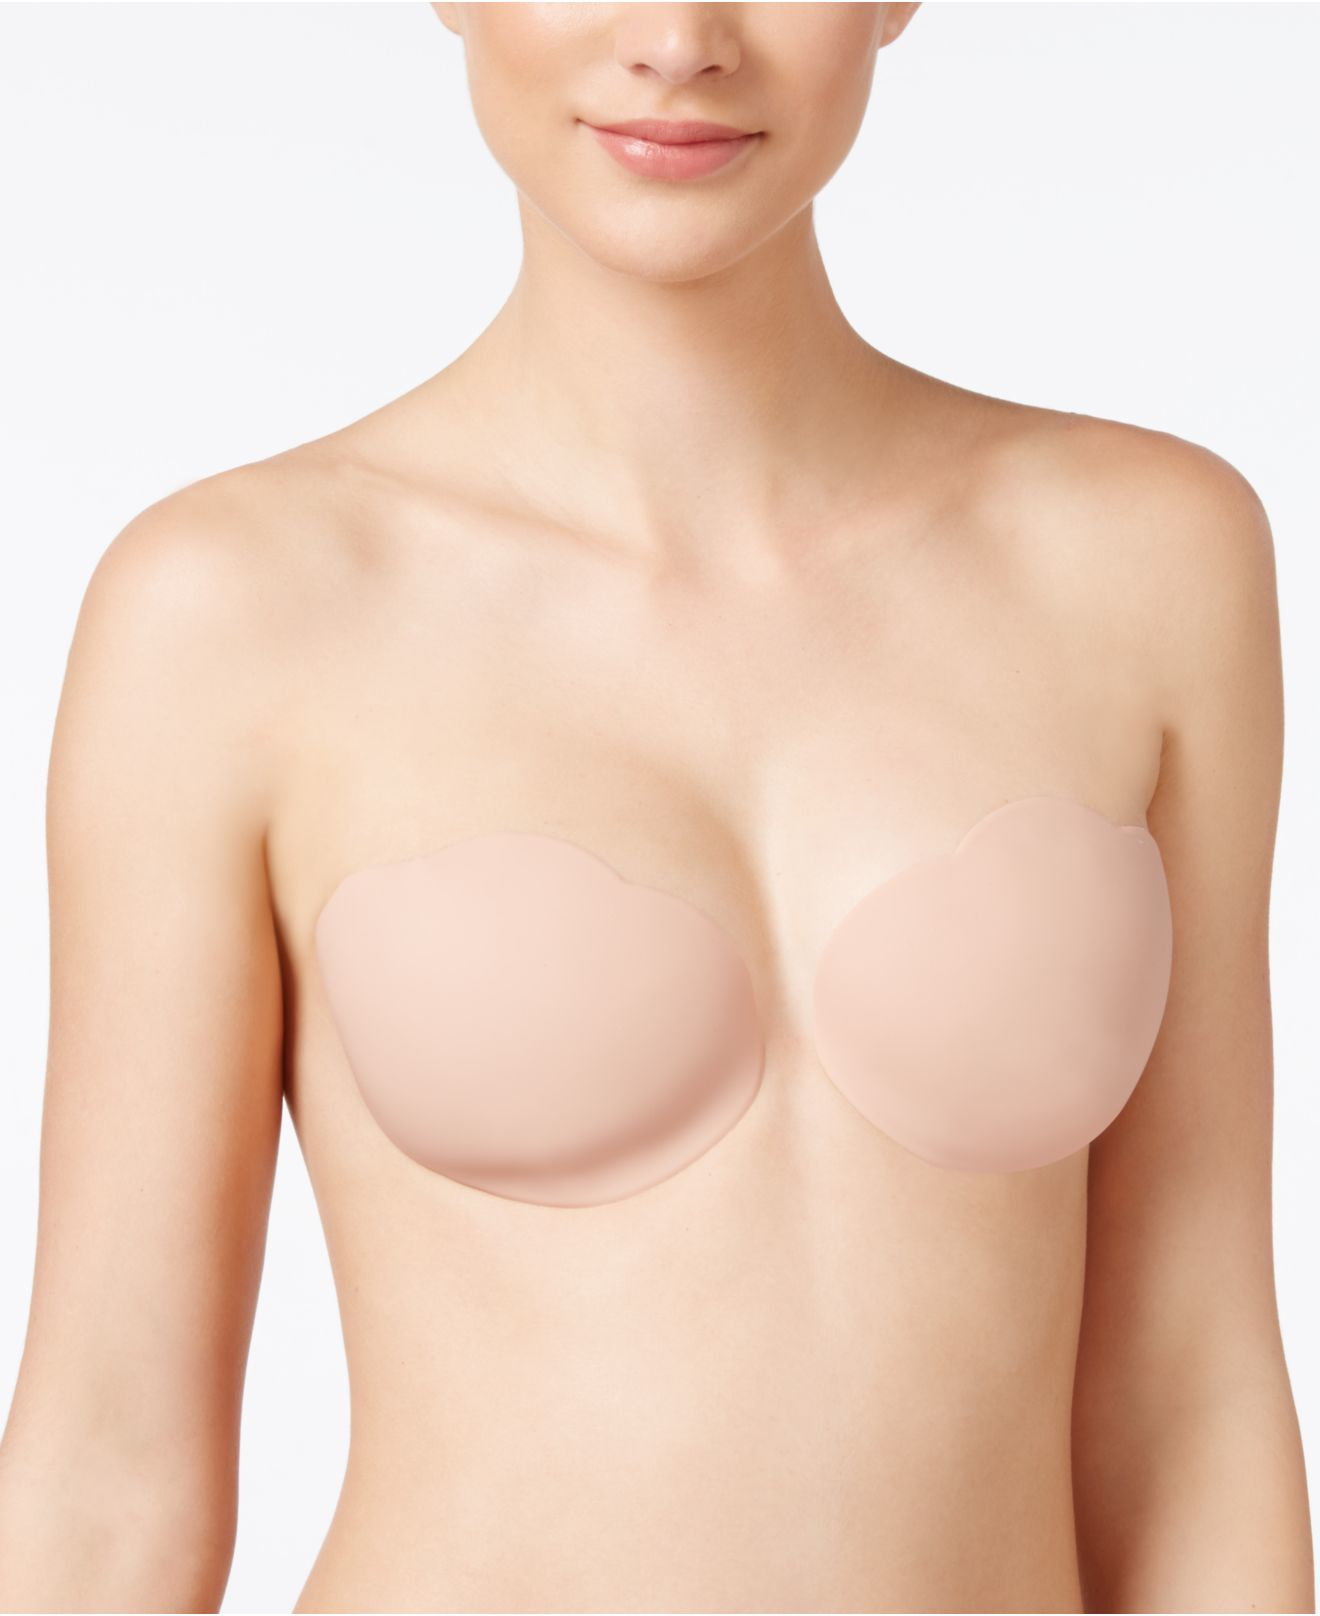 Fashion Forms Full Breast Shaper Mc1306 Lyst for Fantastic Fashion Forms Breast Shapers